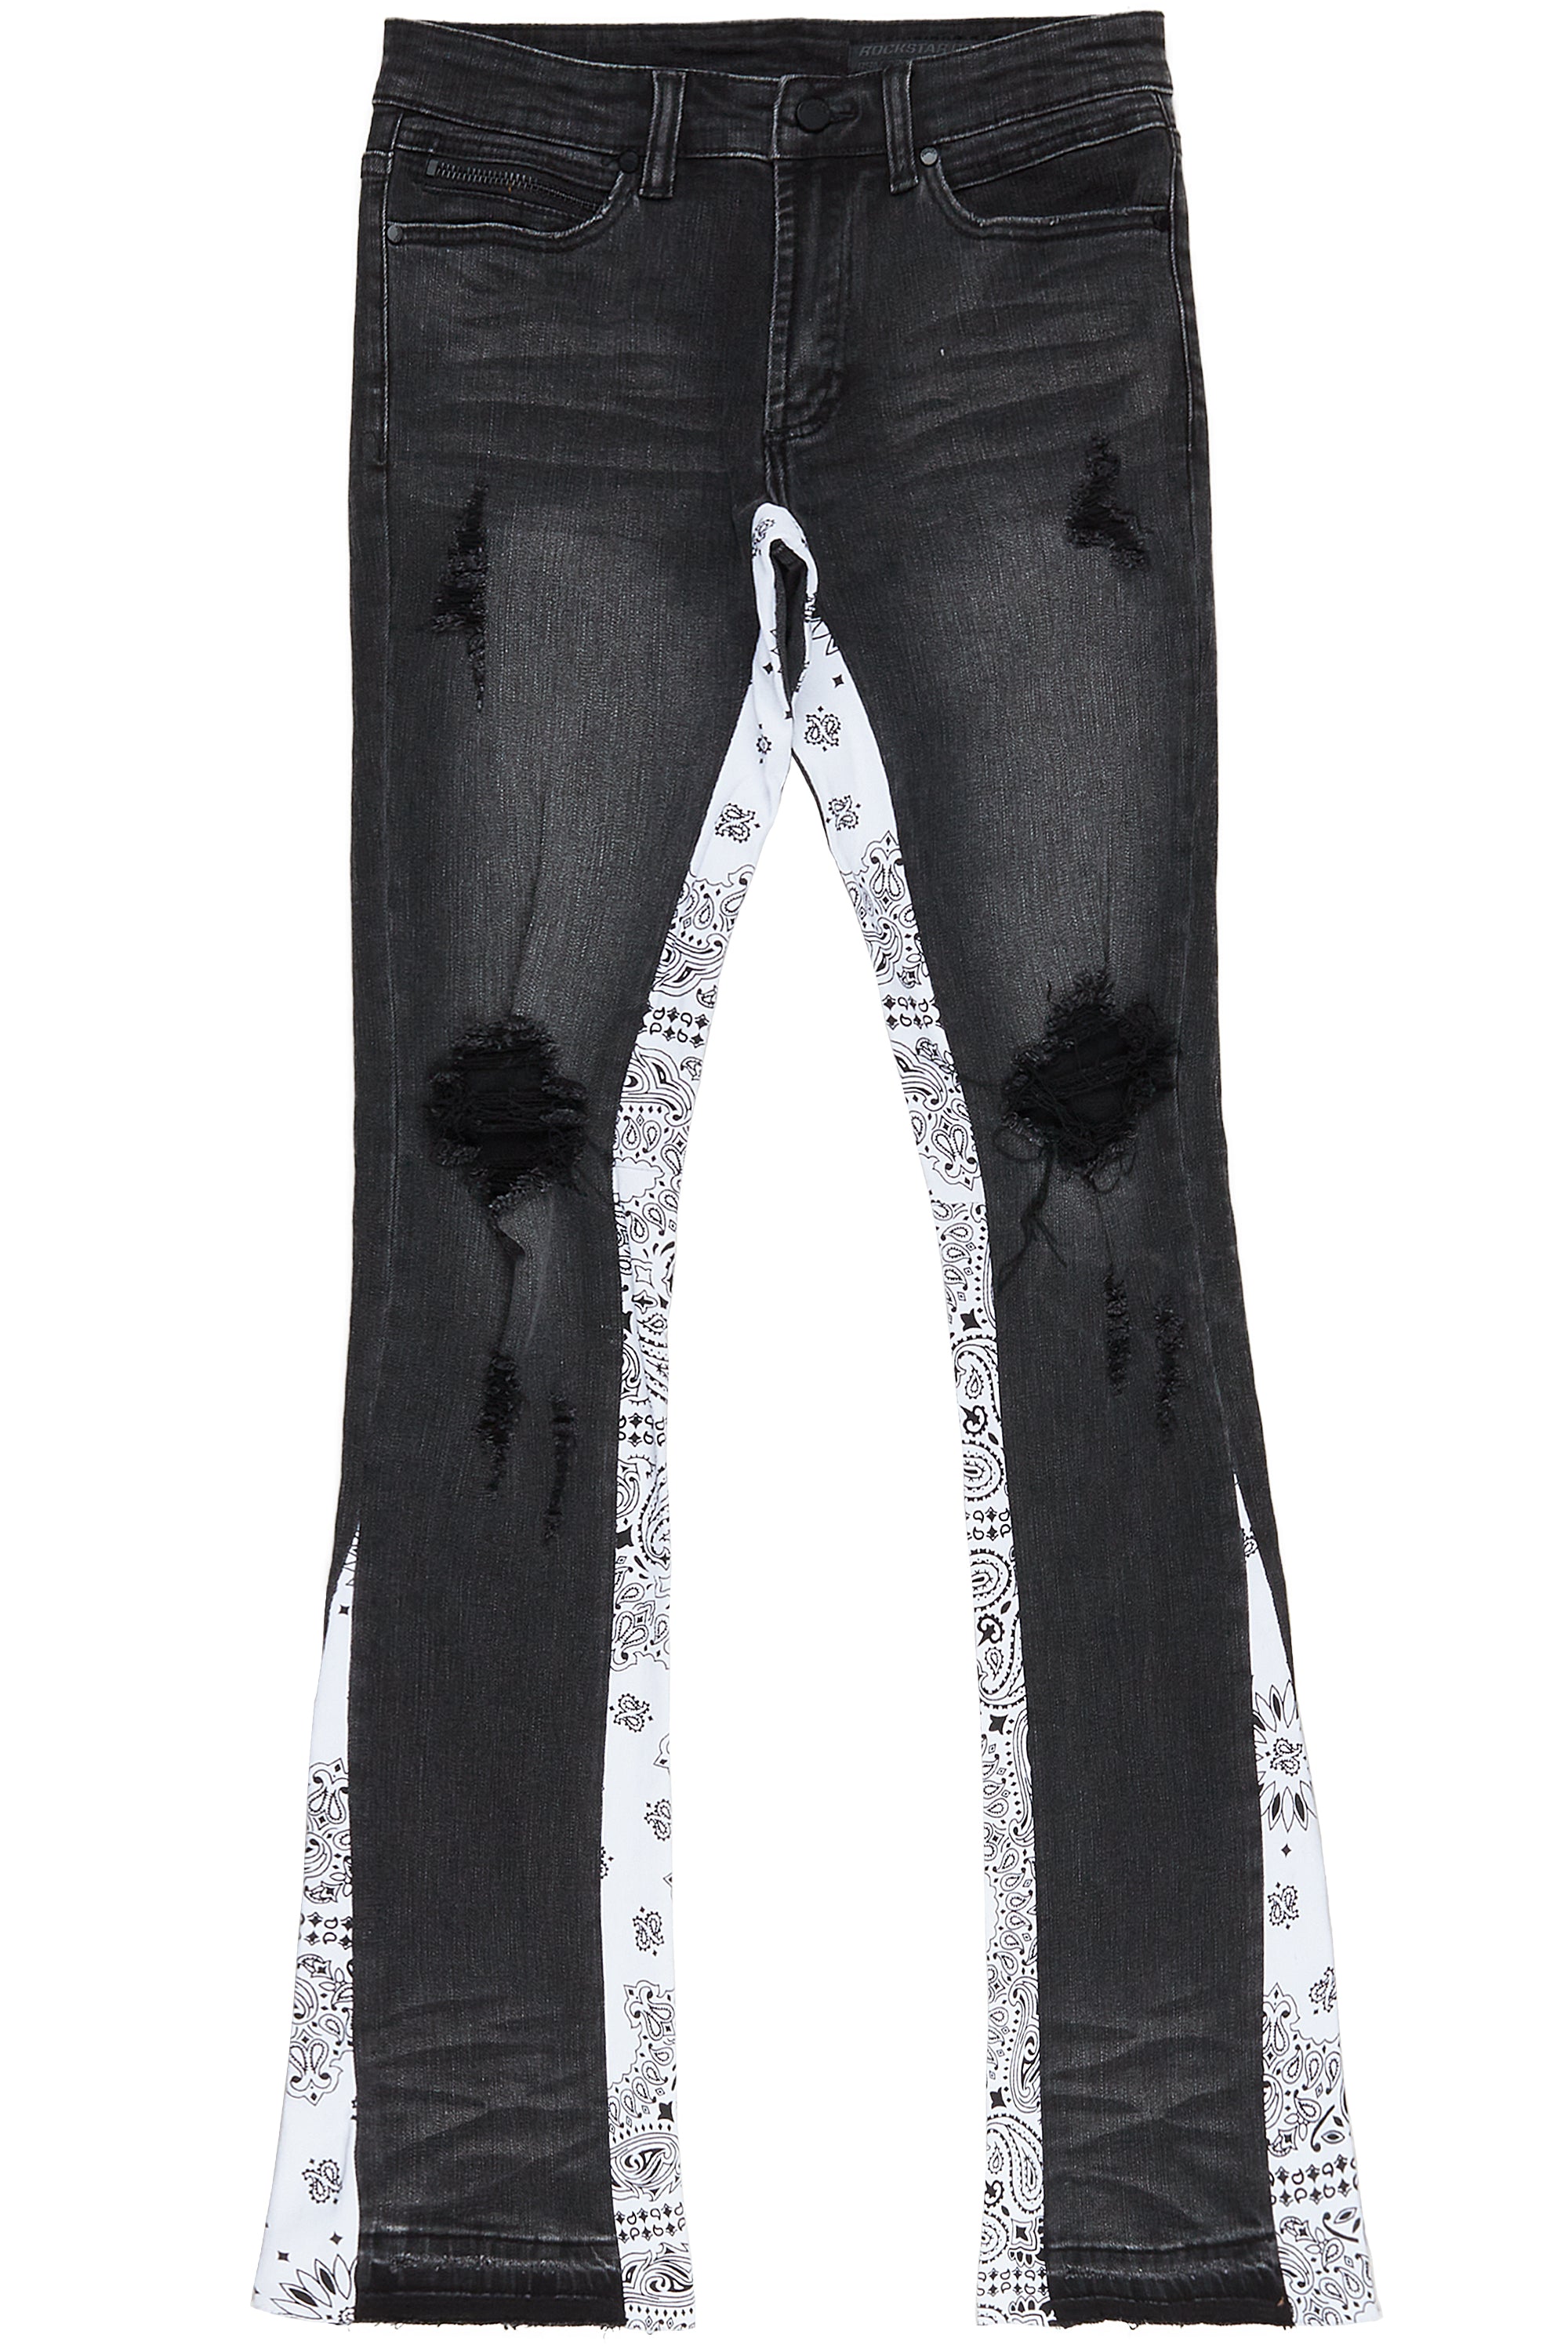 Buy Grey Jeans for Men by SIN Online | Ajio.com